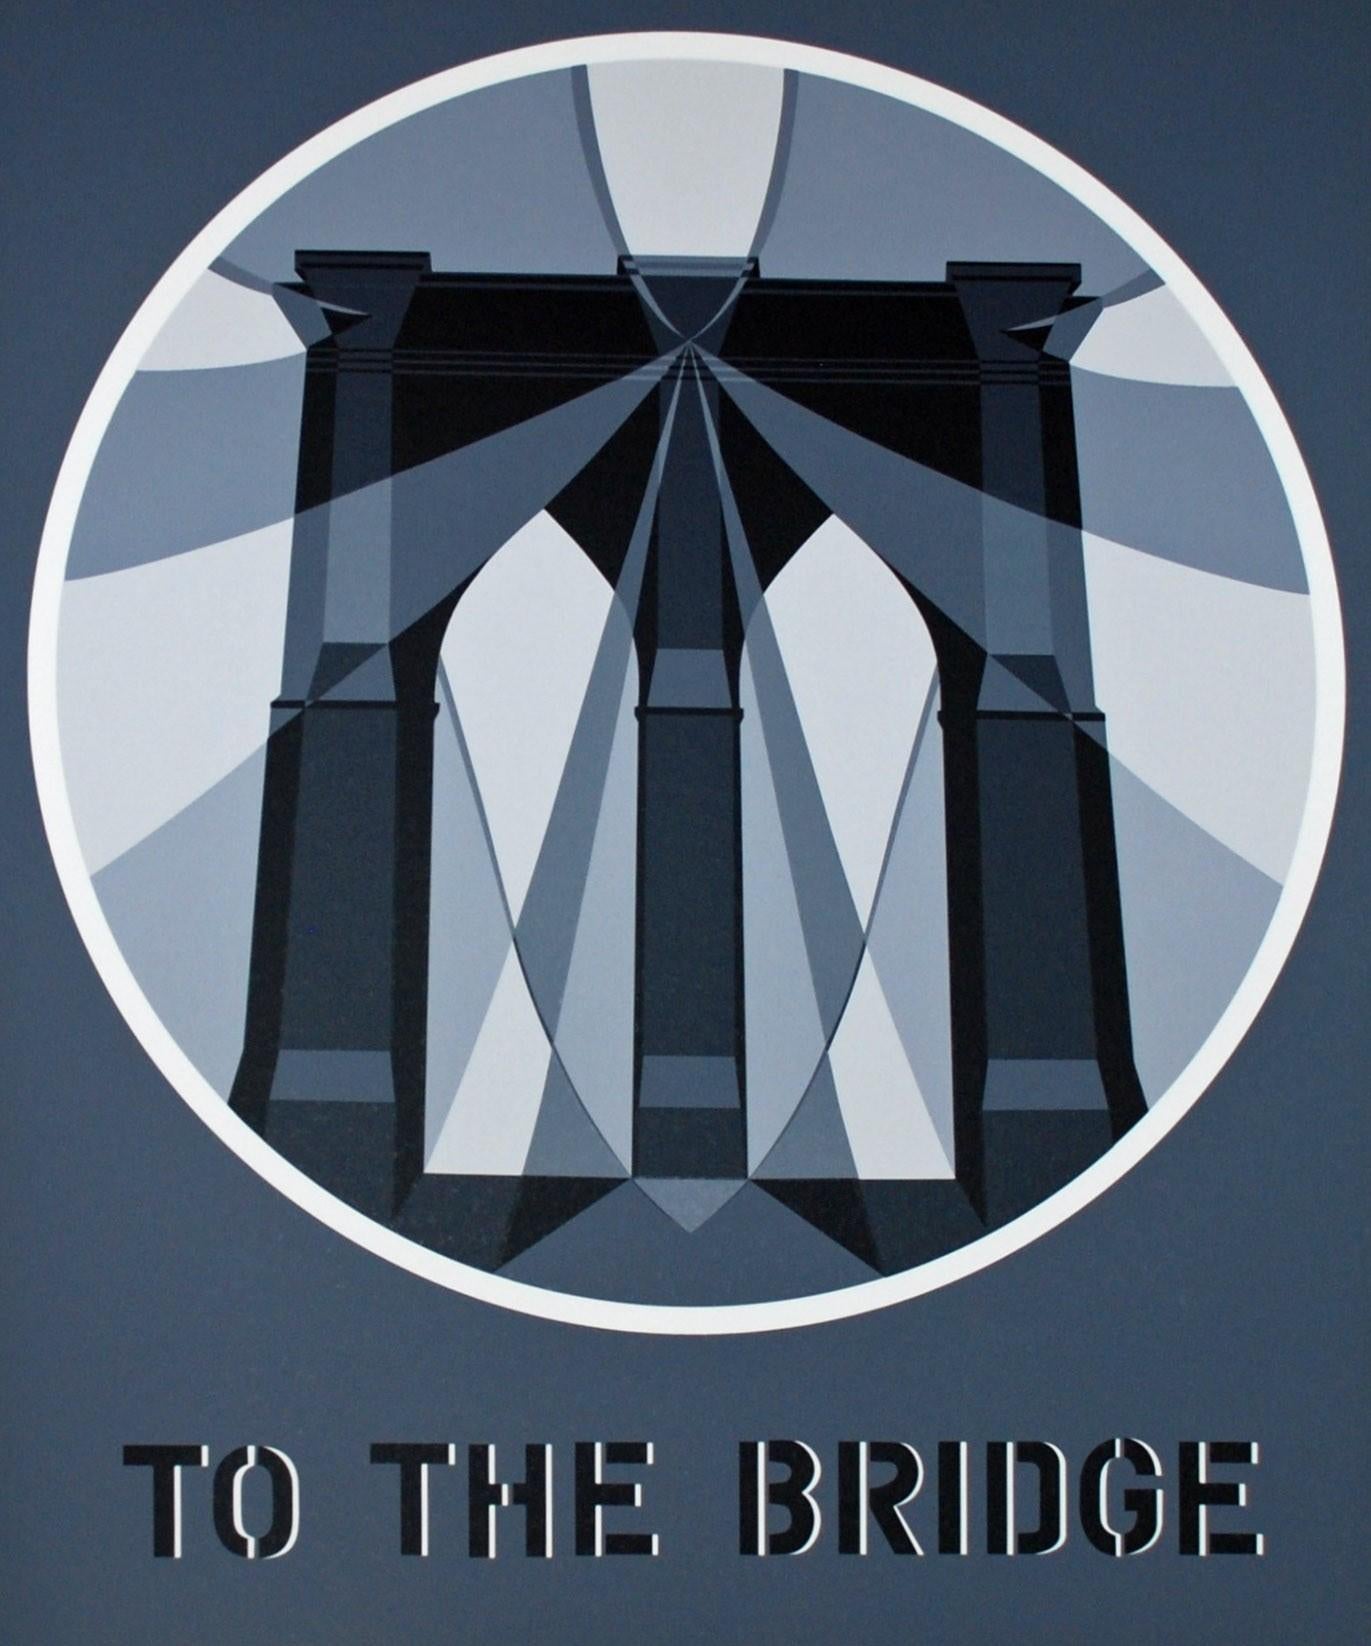 To The Bridge - Print by Robert Indiana